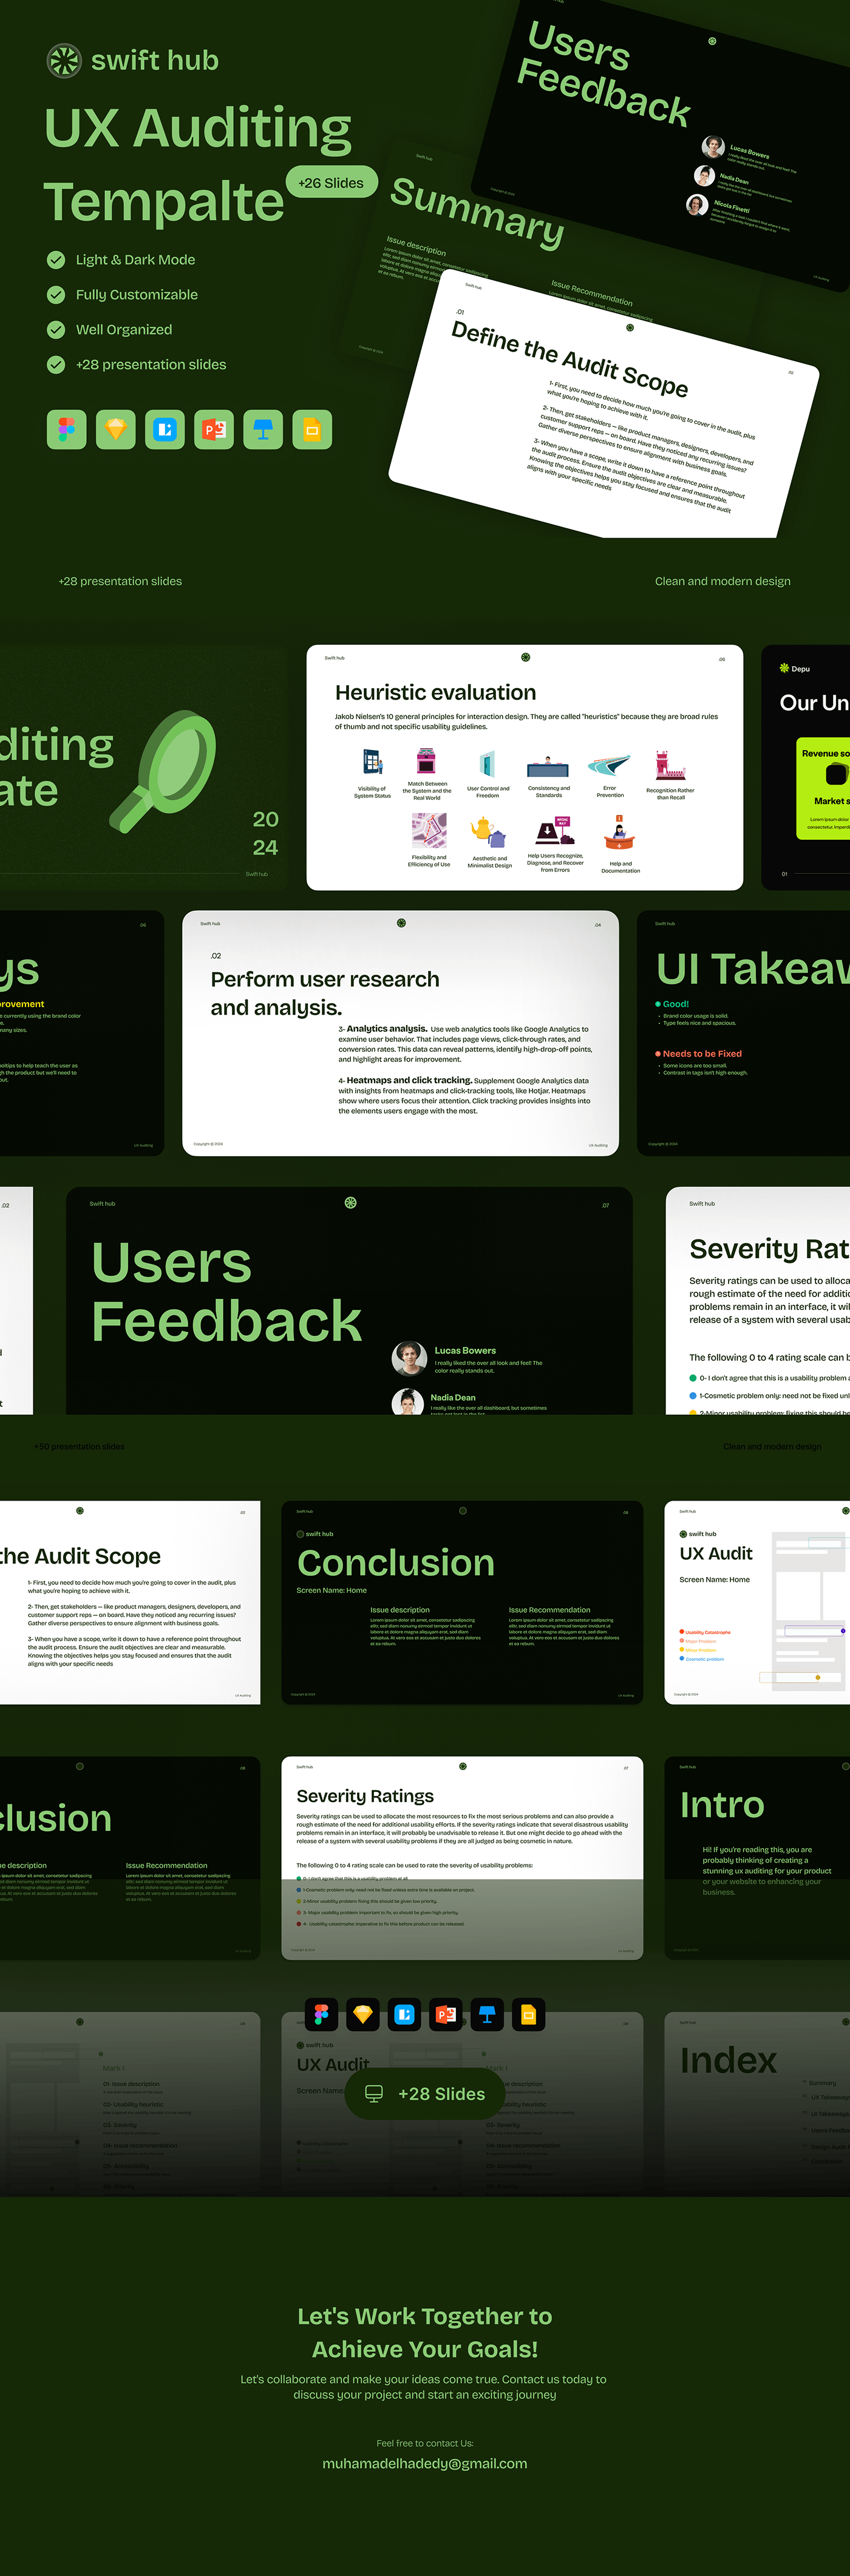 ux UI/UX user experience user interface UX design ui design Figma template presentation business